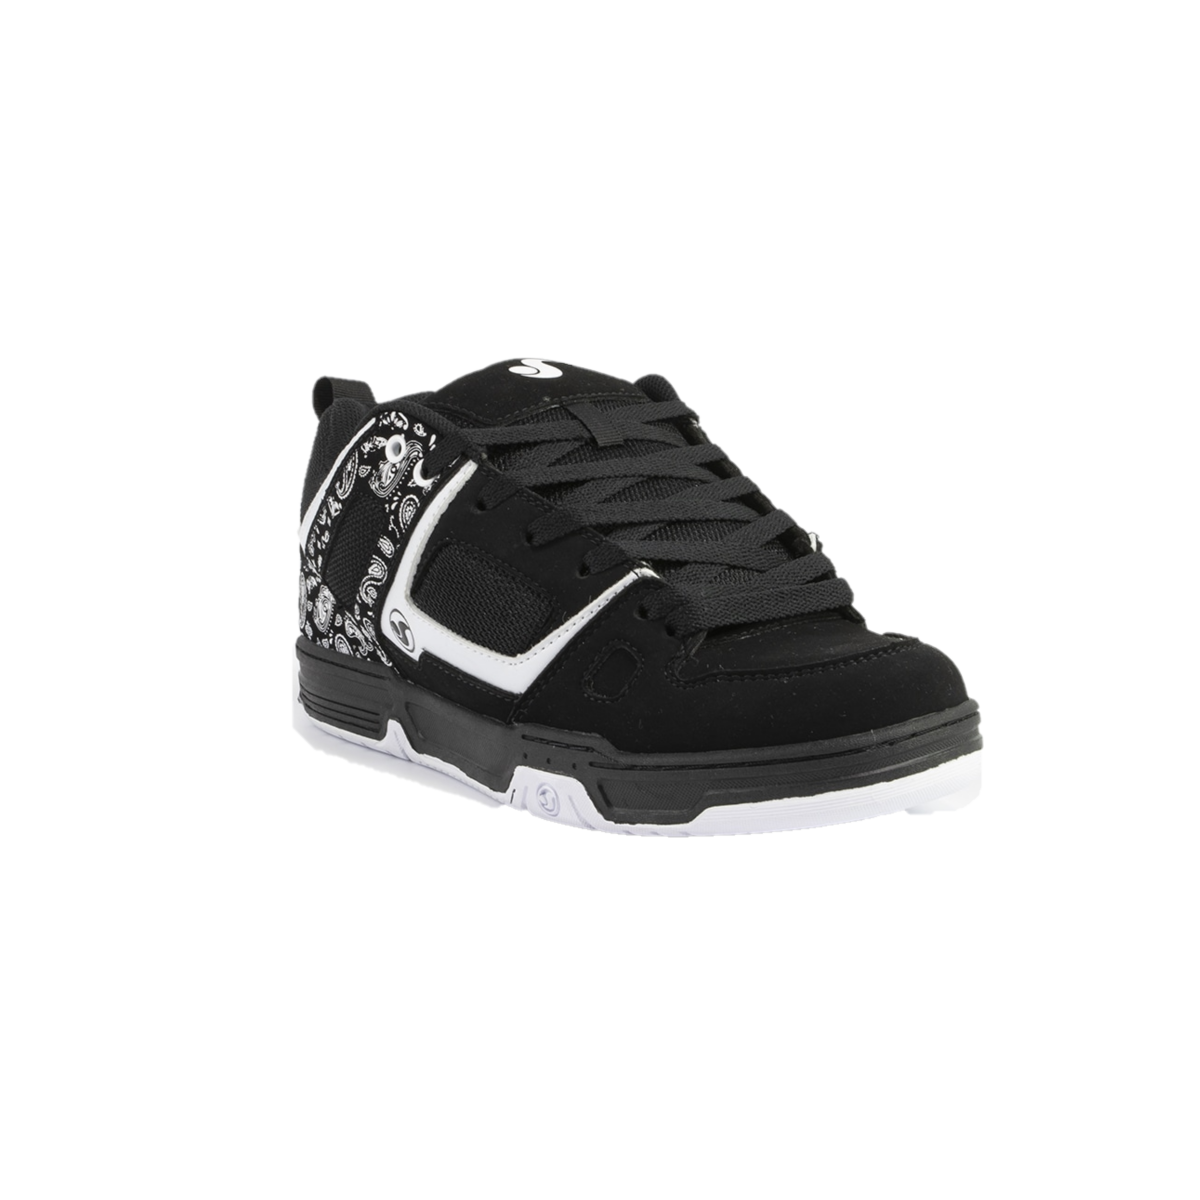 DVS F0000329002 GAMBOL MN'S (Medium) Black/White Leather & Nubuck Skate Shoes